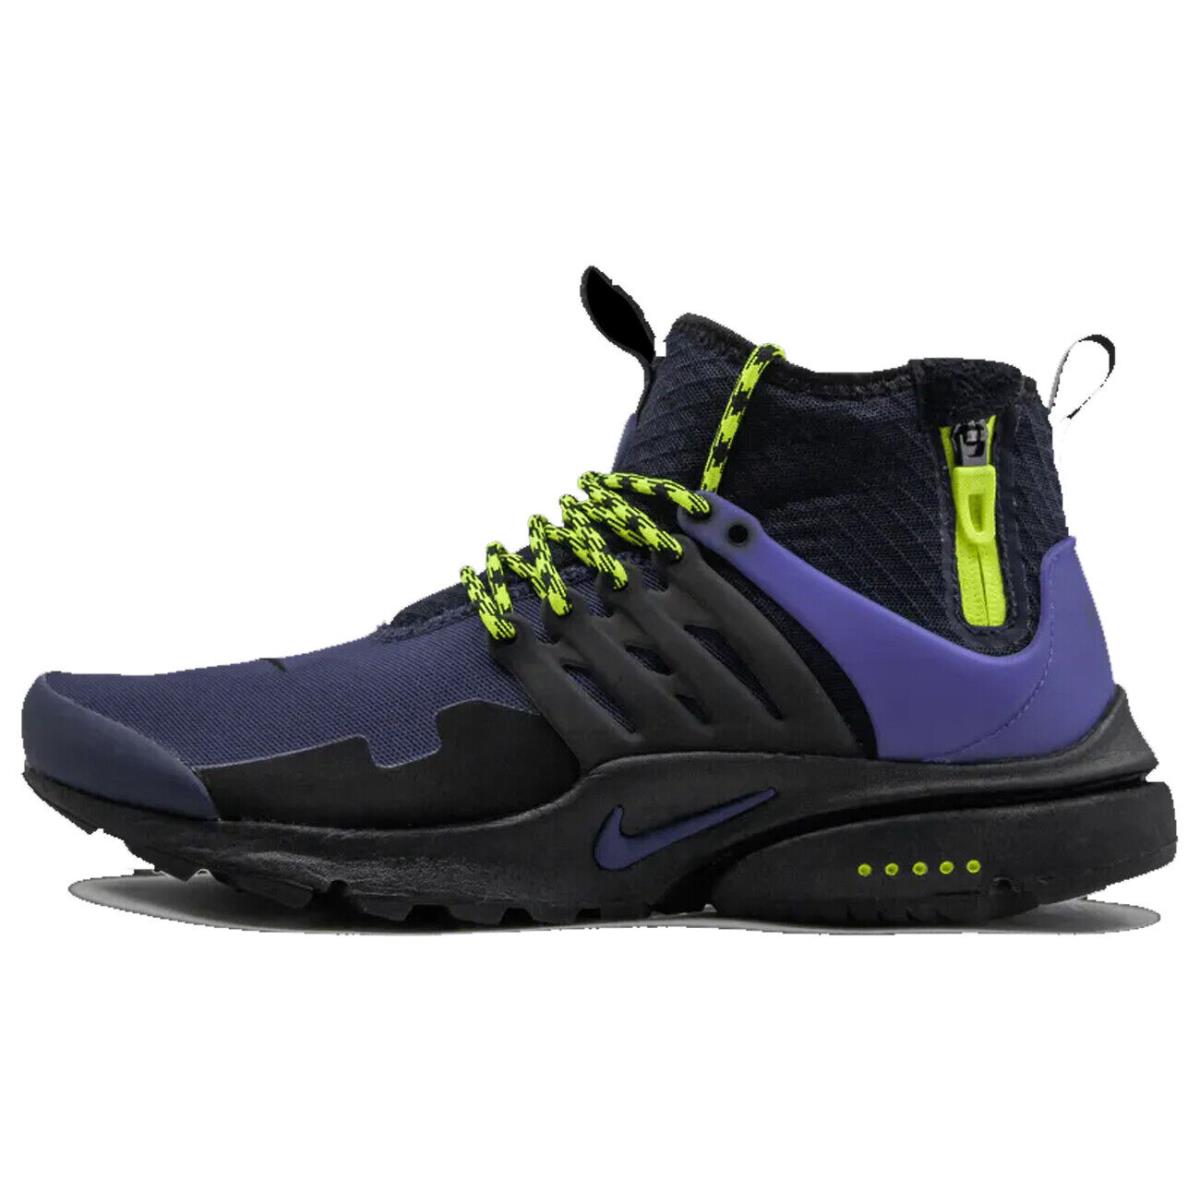 Nike Air Presto 859524 402 Utility Navy Volt Men`s Casual Fashion Sneakers